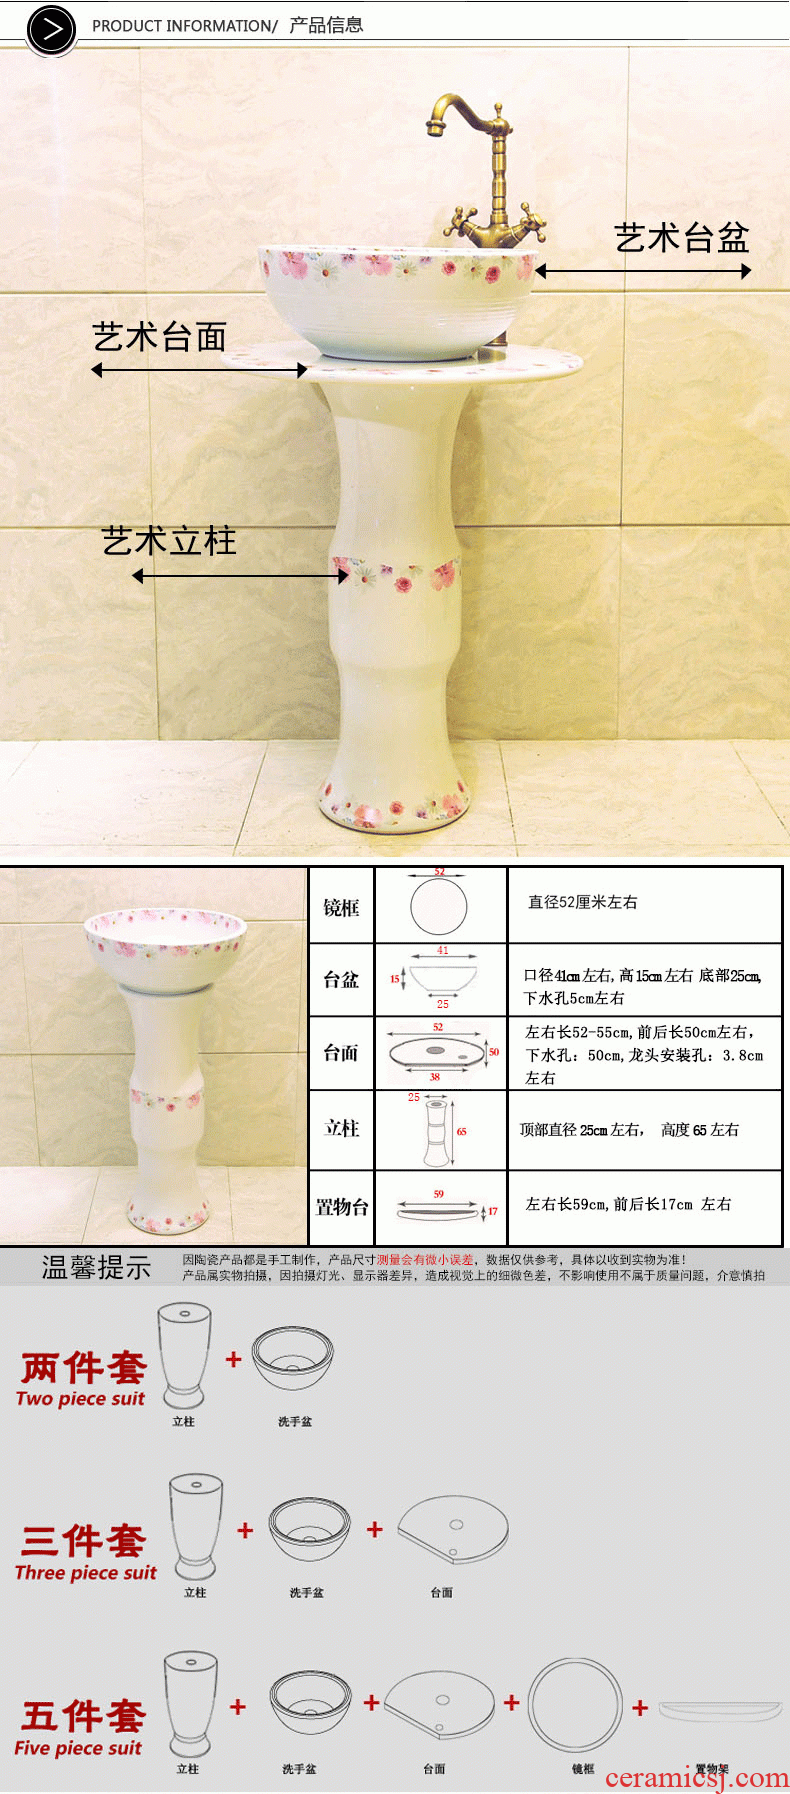 JingXiangLin balcony sets of basin of jingdezhen ceramic art basin pillar lavatory basin three-piece & ndash; Small broken flower